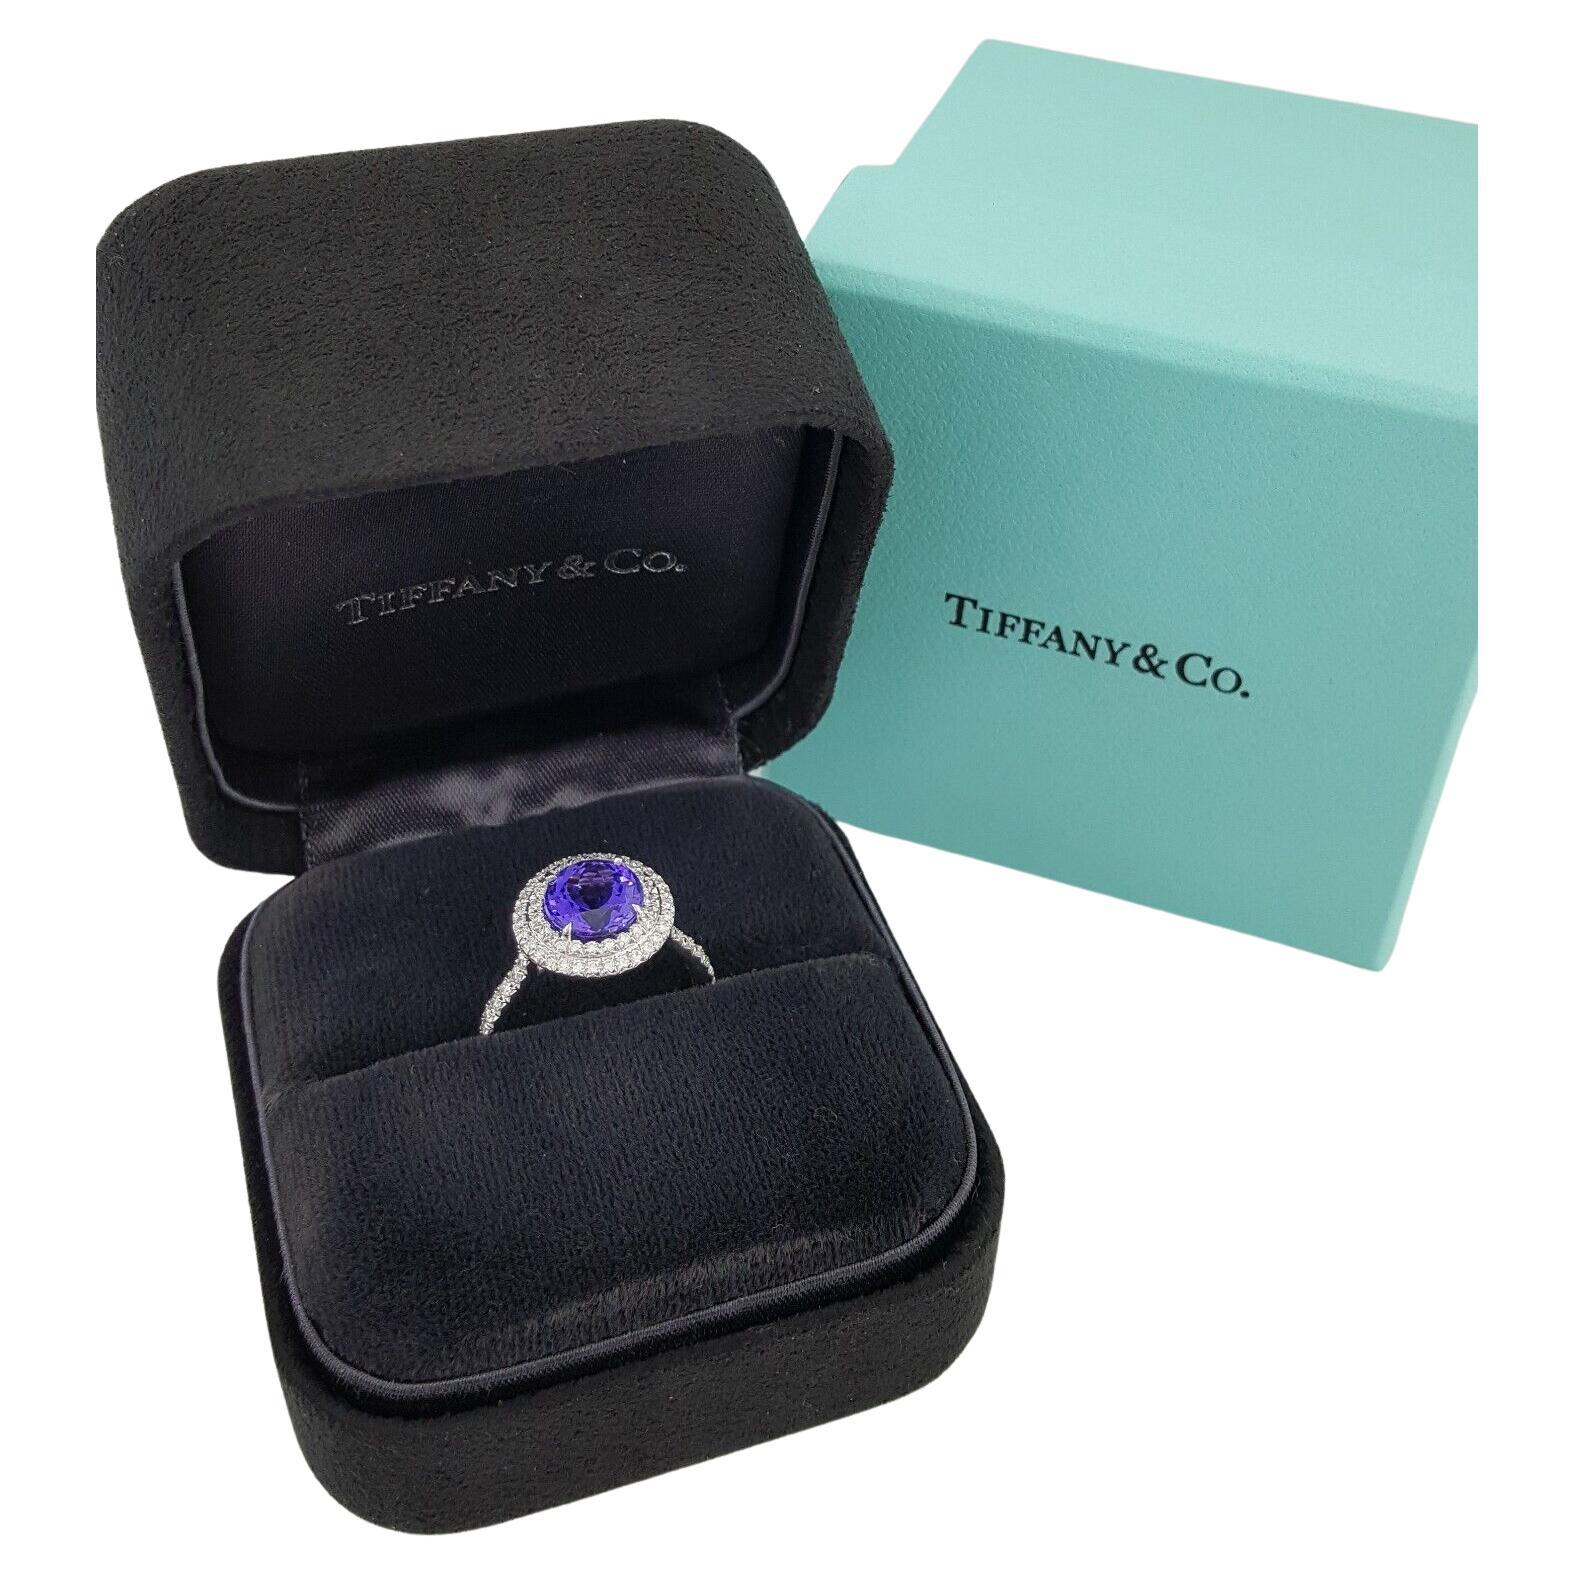 Contemporary Tiffany & Co. Platinum Soleste 2.63 Carat Excellent Cut Diamond Ring For Sale